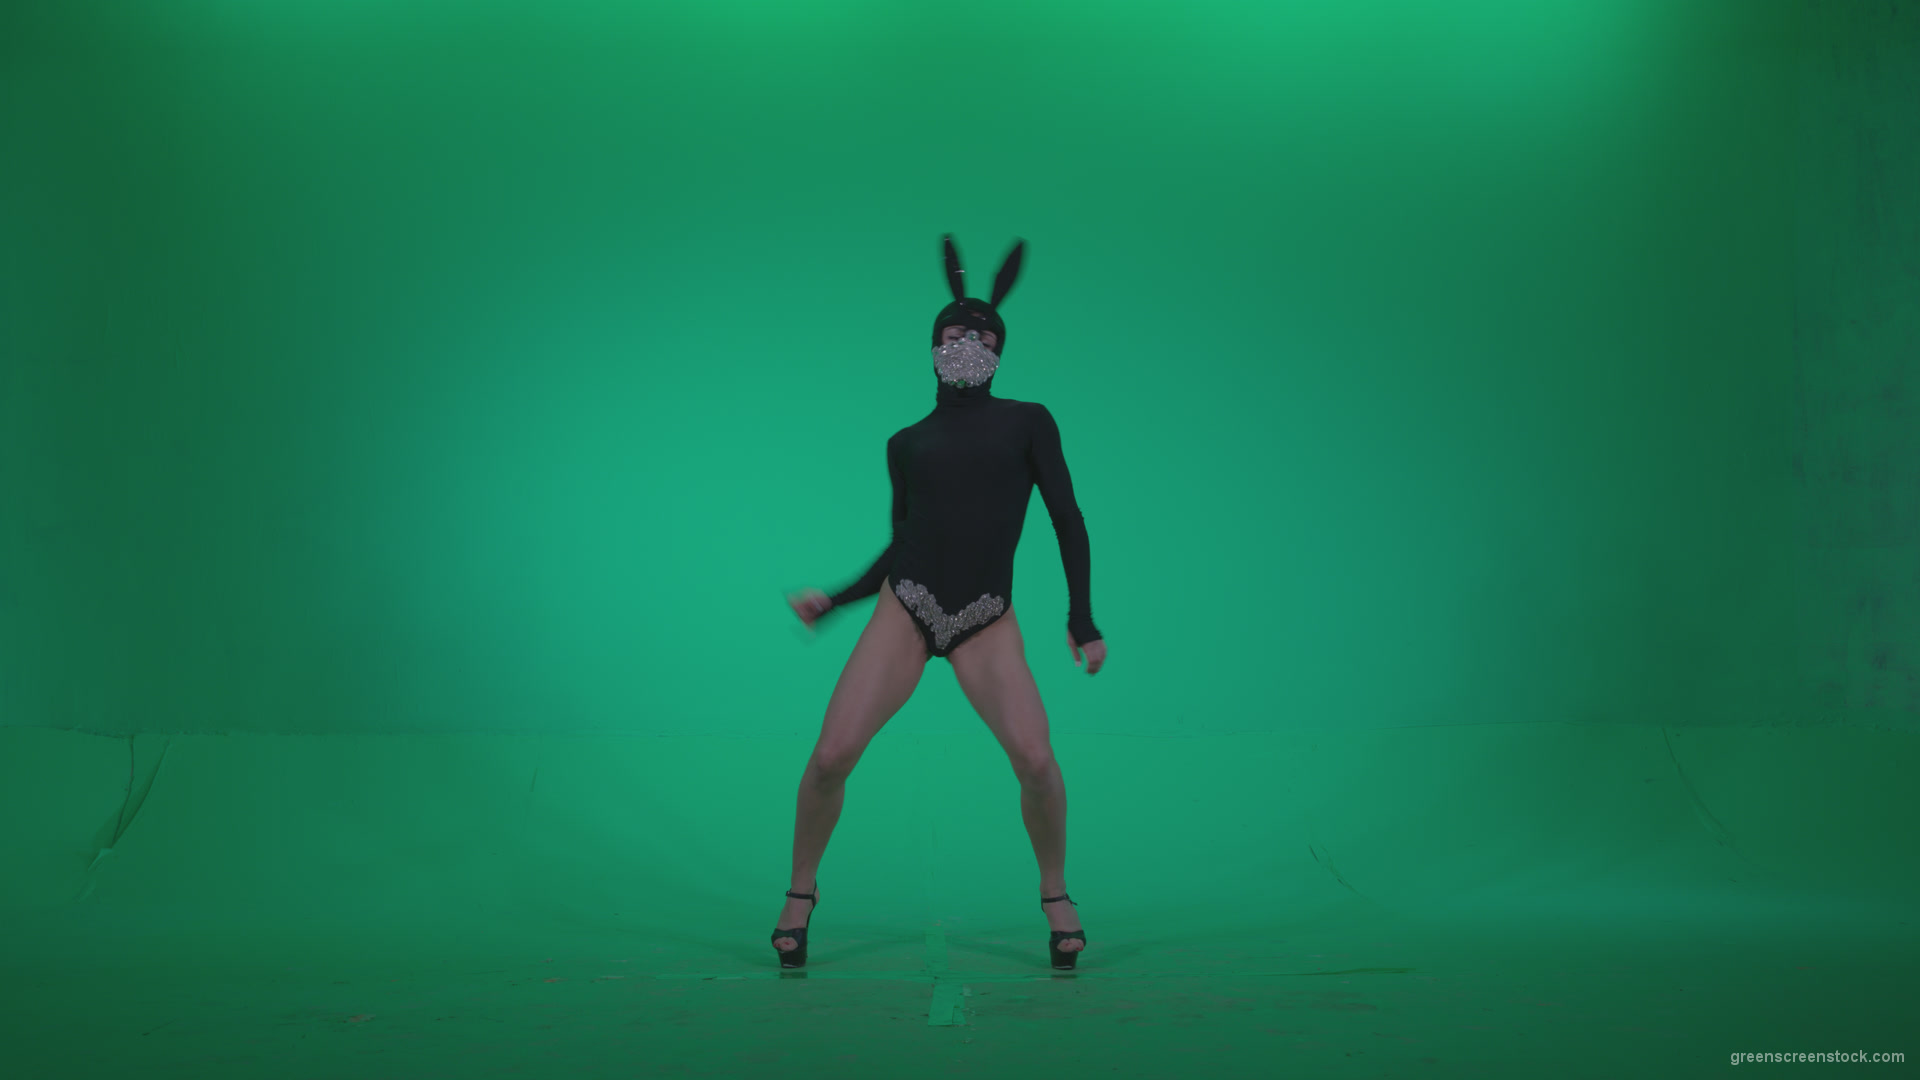 Go-go-Dancer-Black-Rabbit-u9-Green-Screen-Video-Footage_005 Green Screen Stock